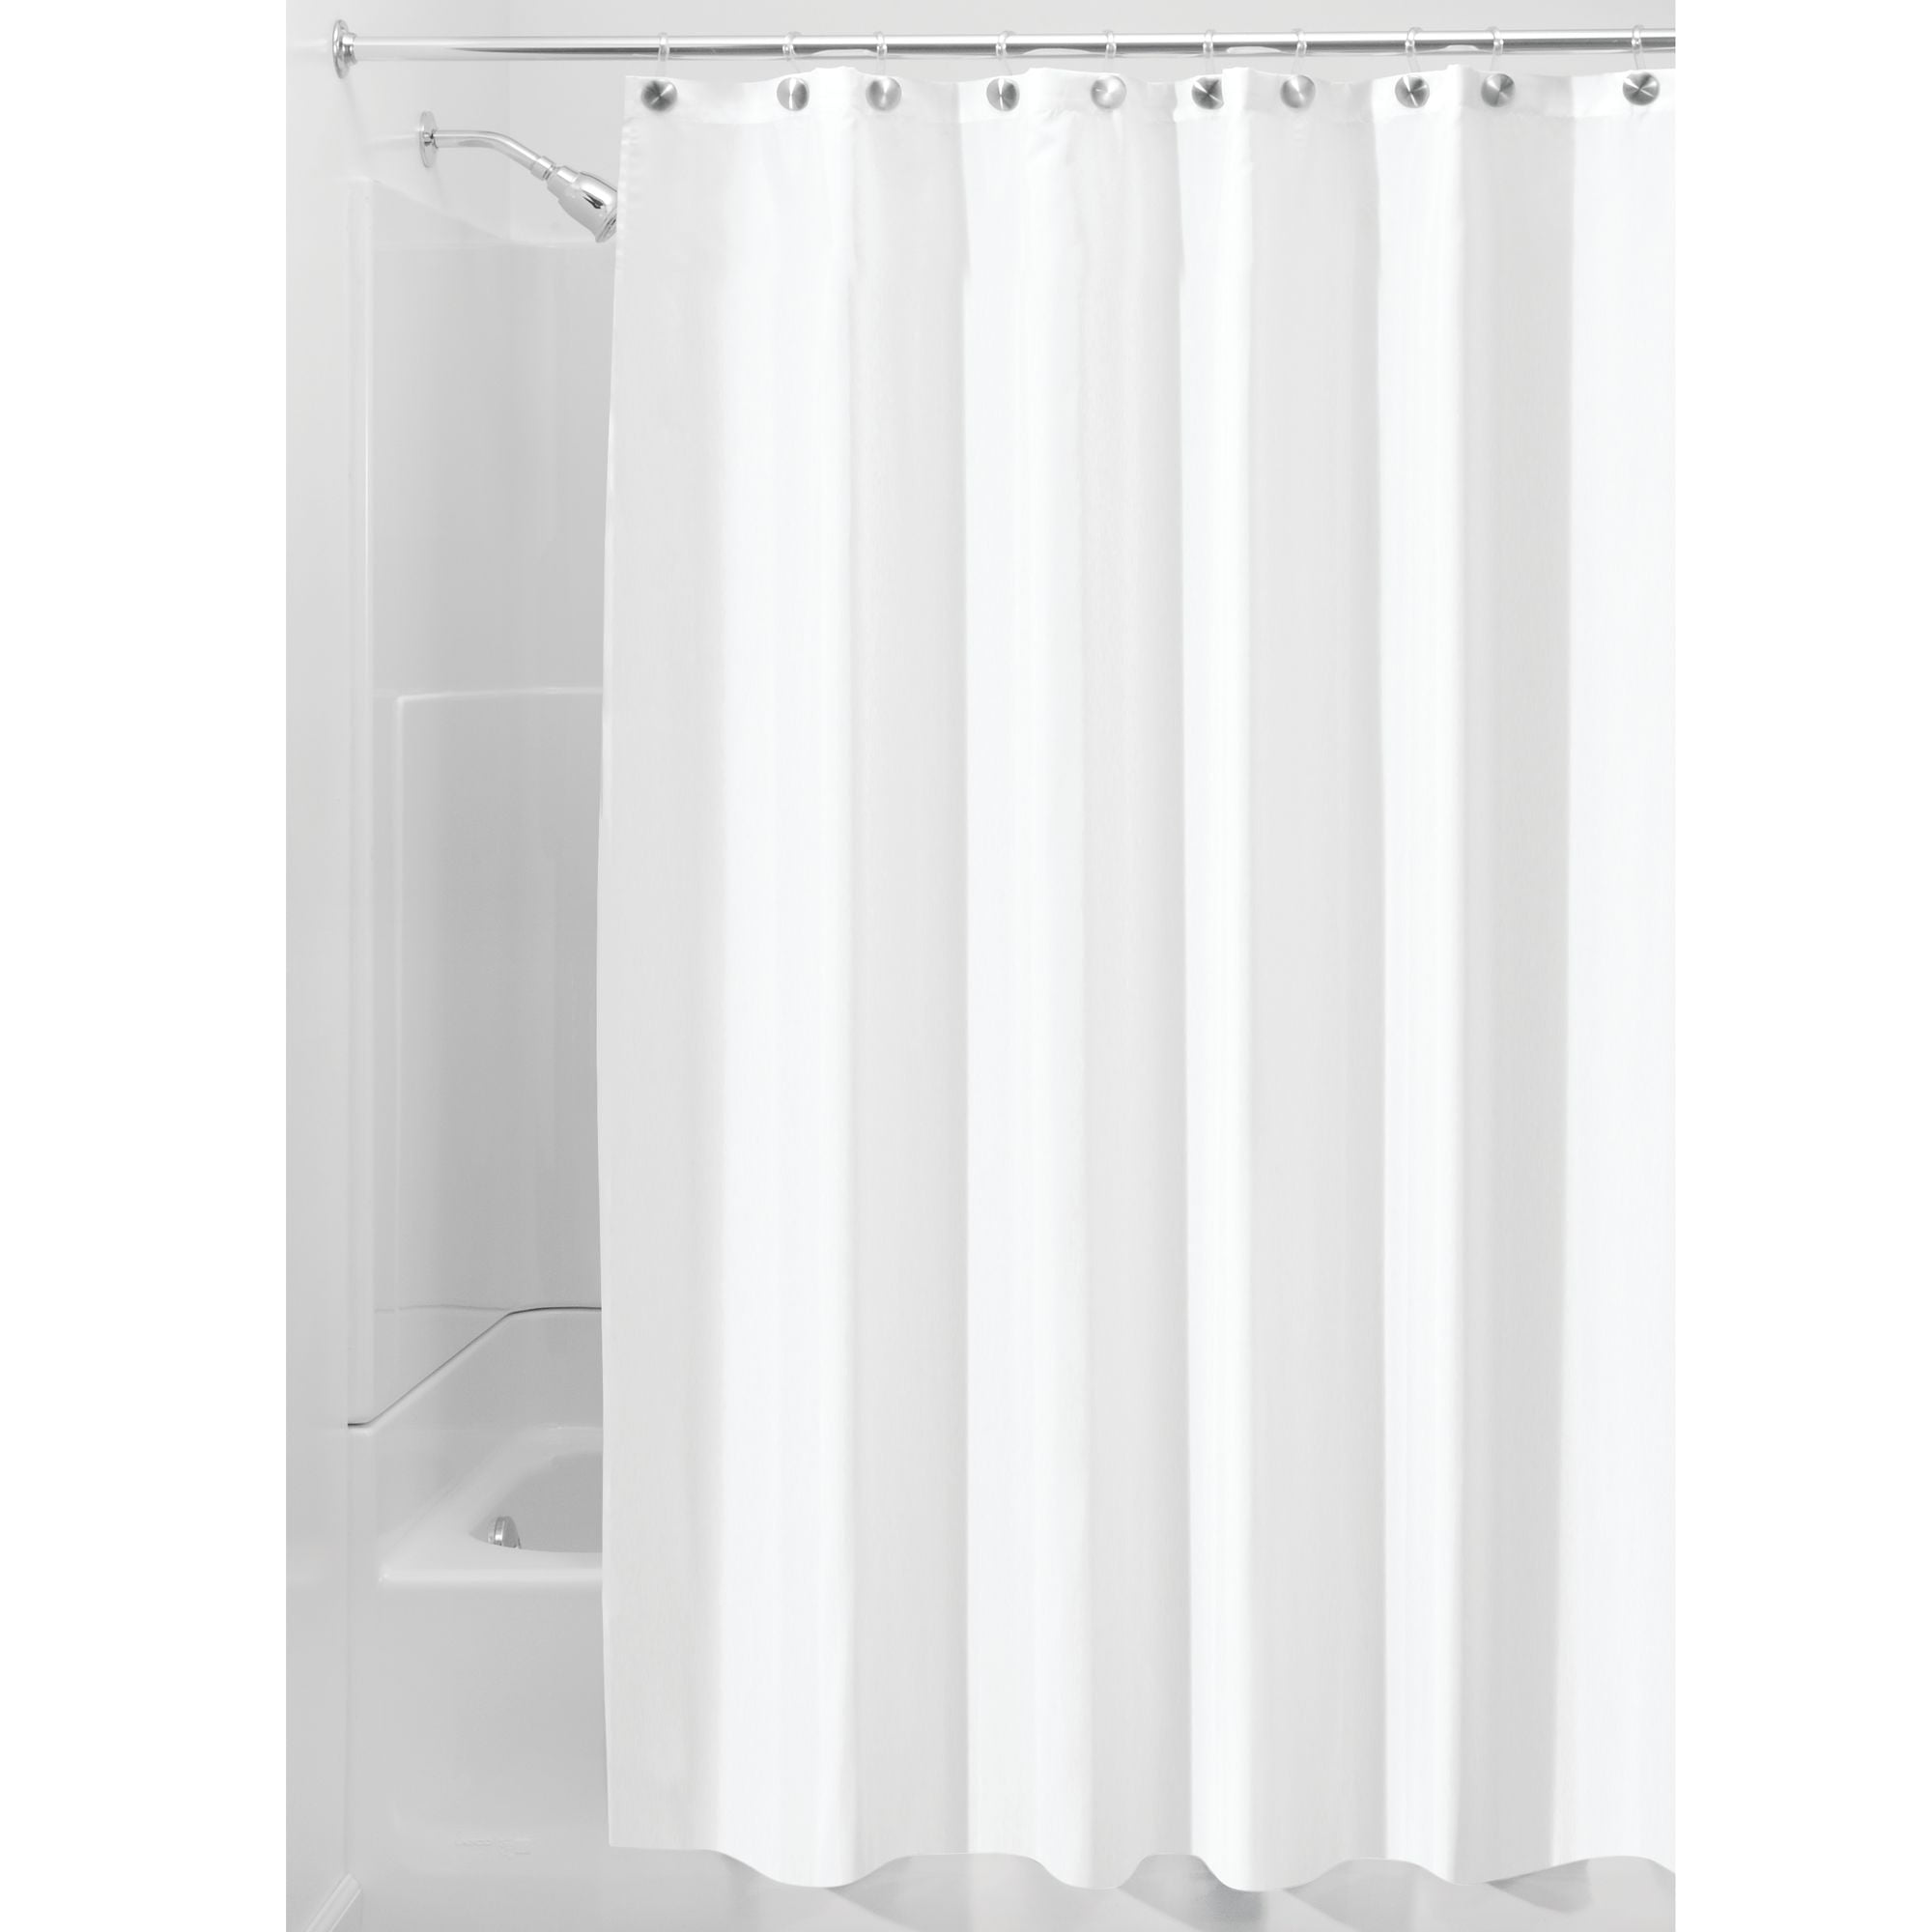 Interdesign Waterproof Fabric Shower, Extra Wide Shower Curtain Rod